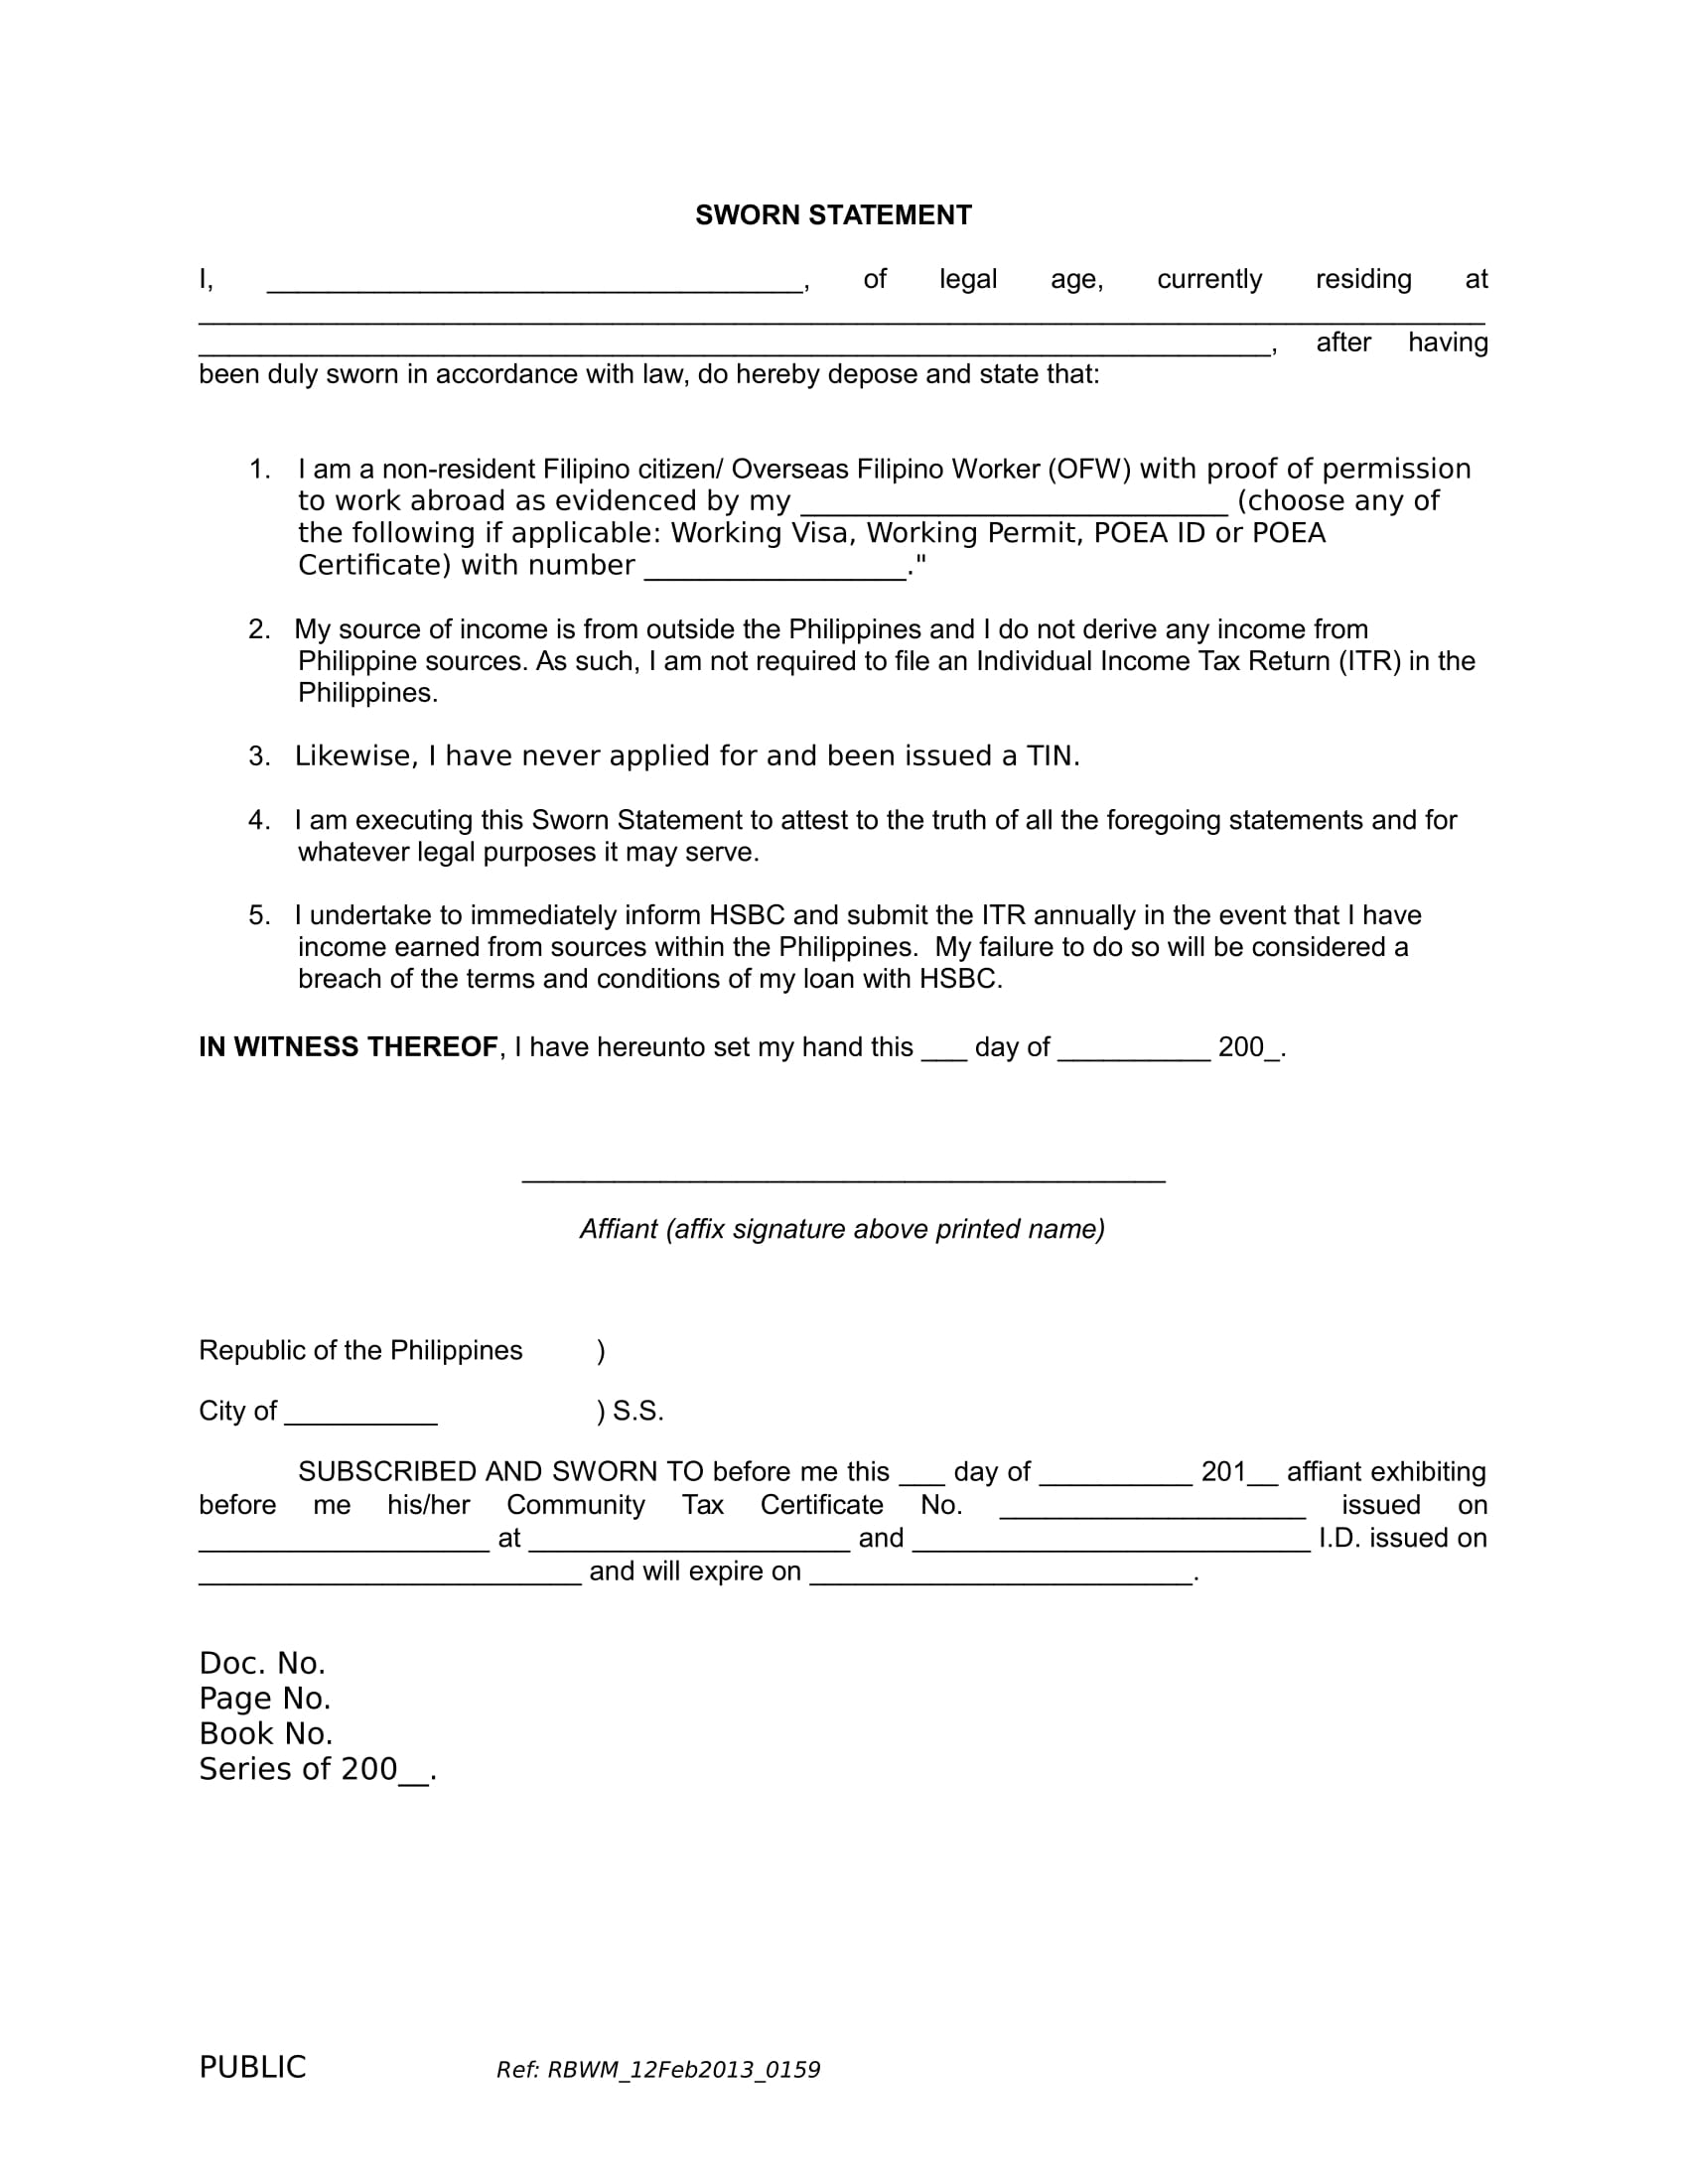 sworn statement form sample 1